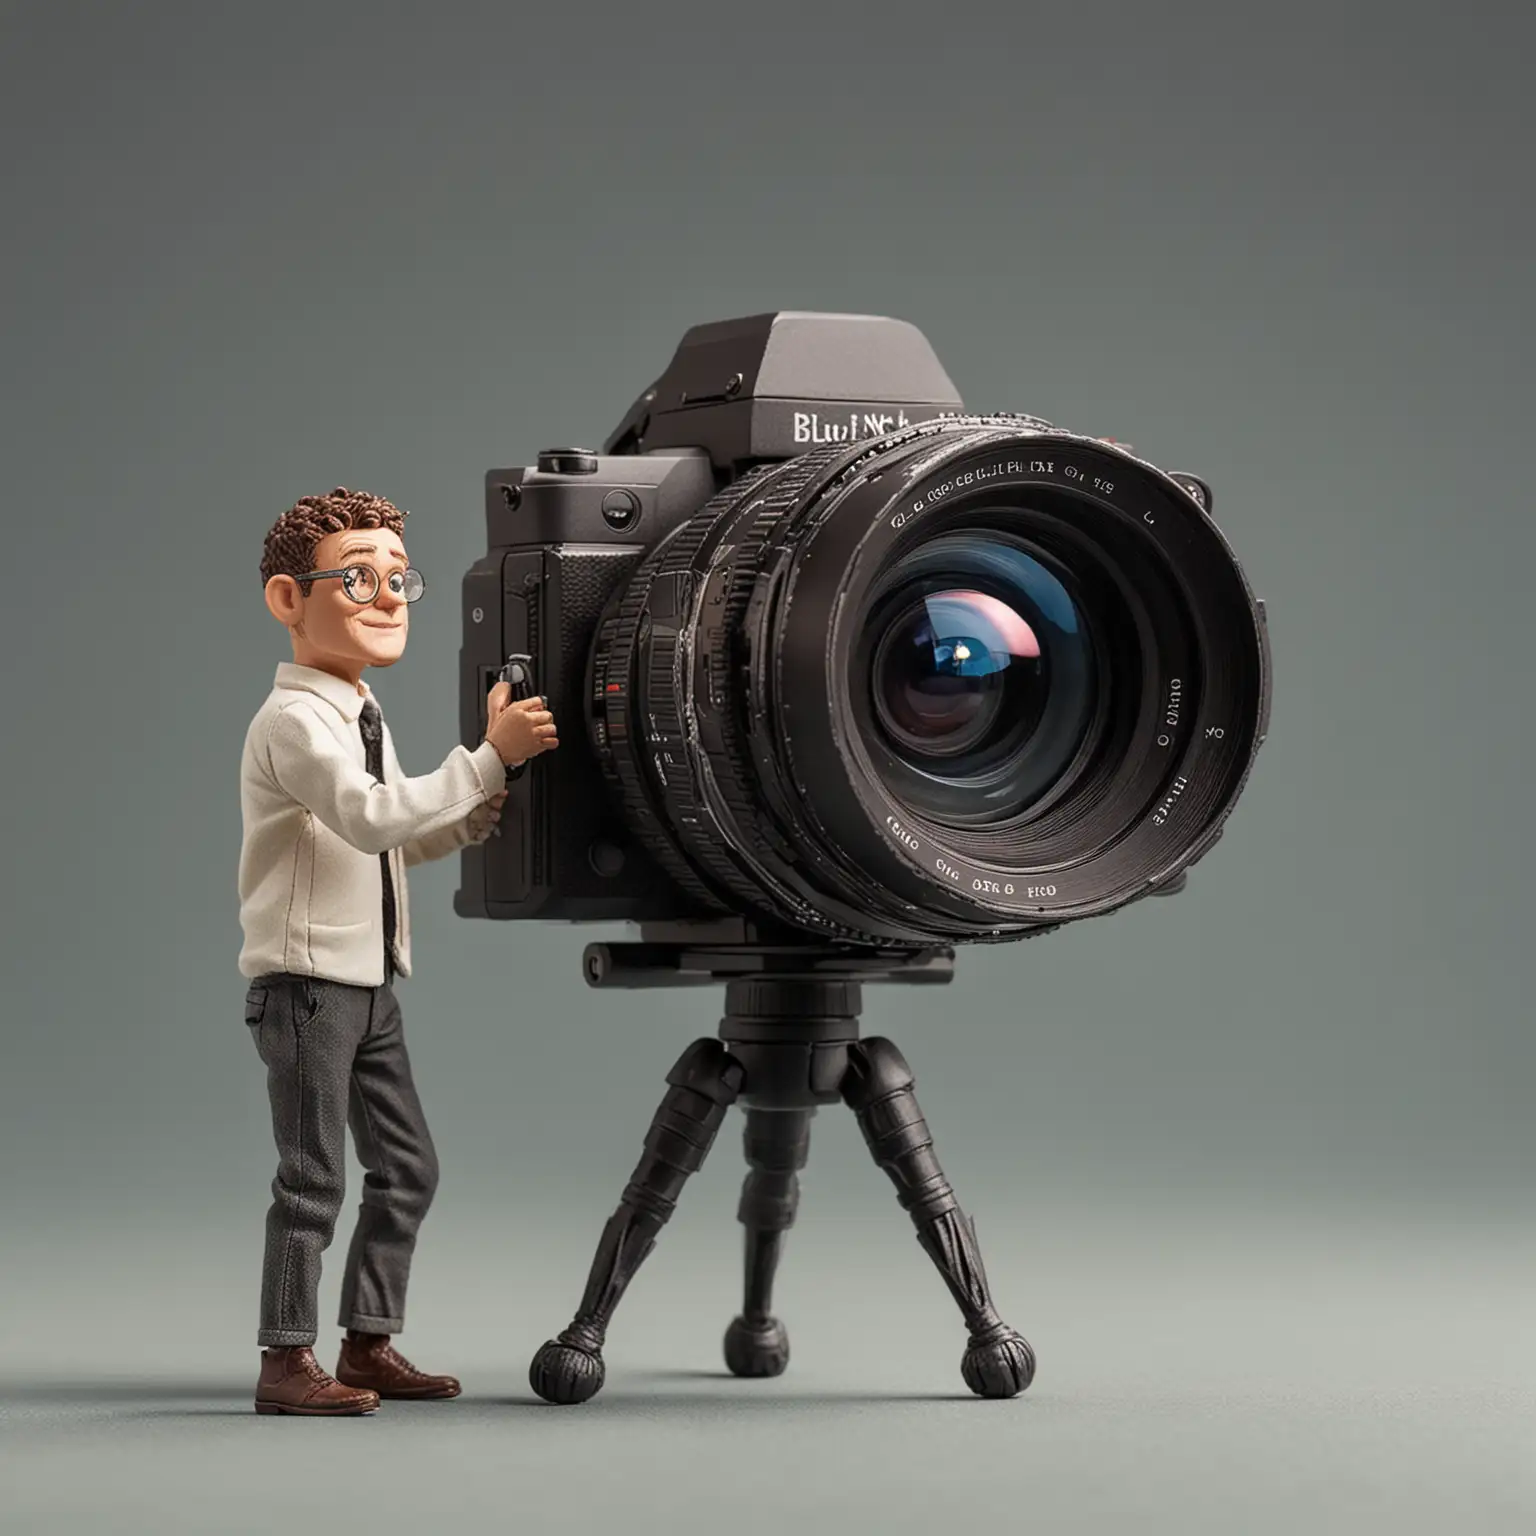 Tiny man holding large camera with giganic lens